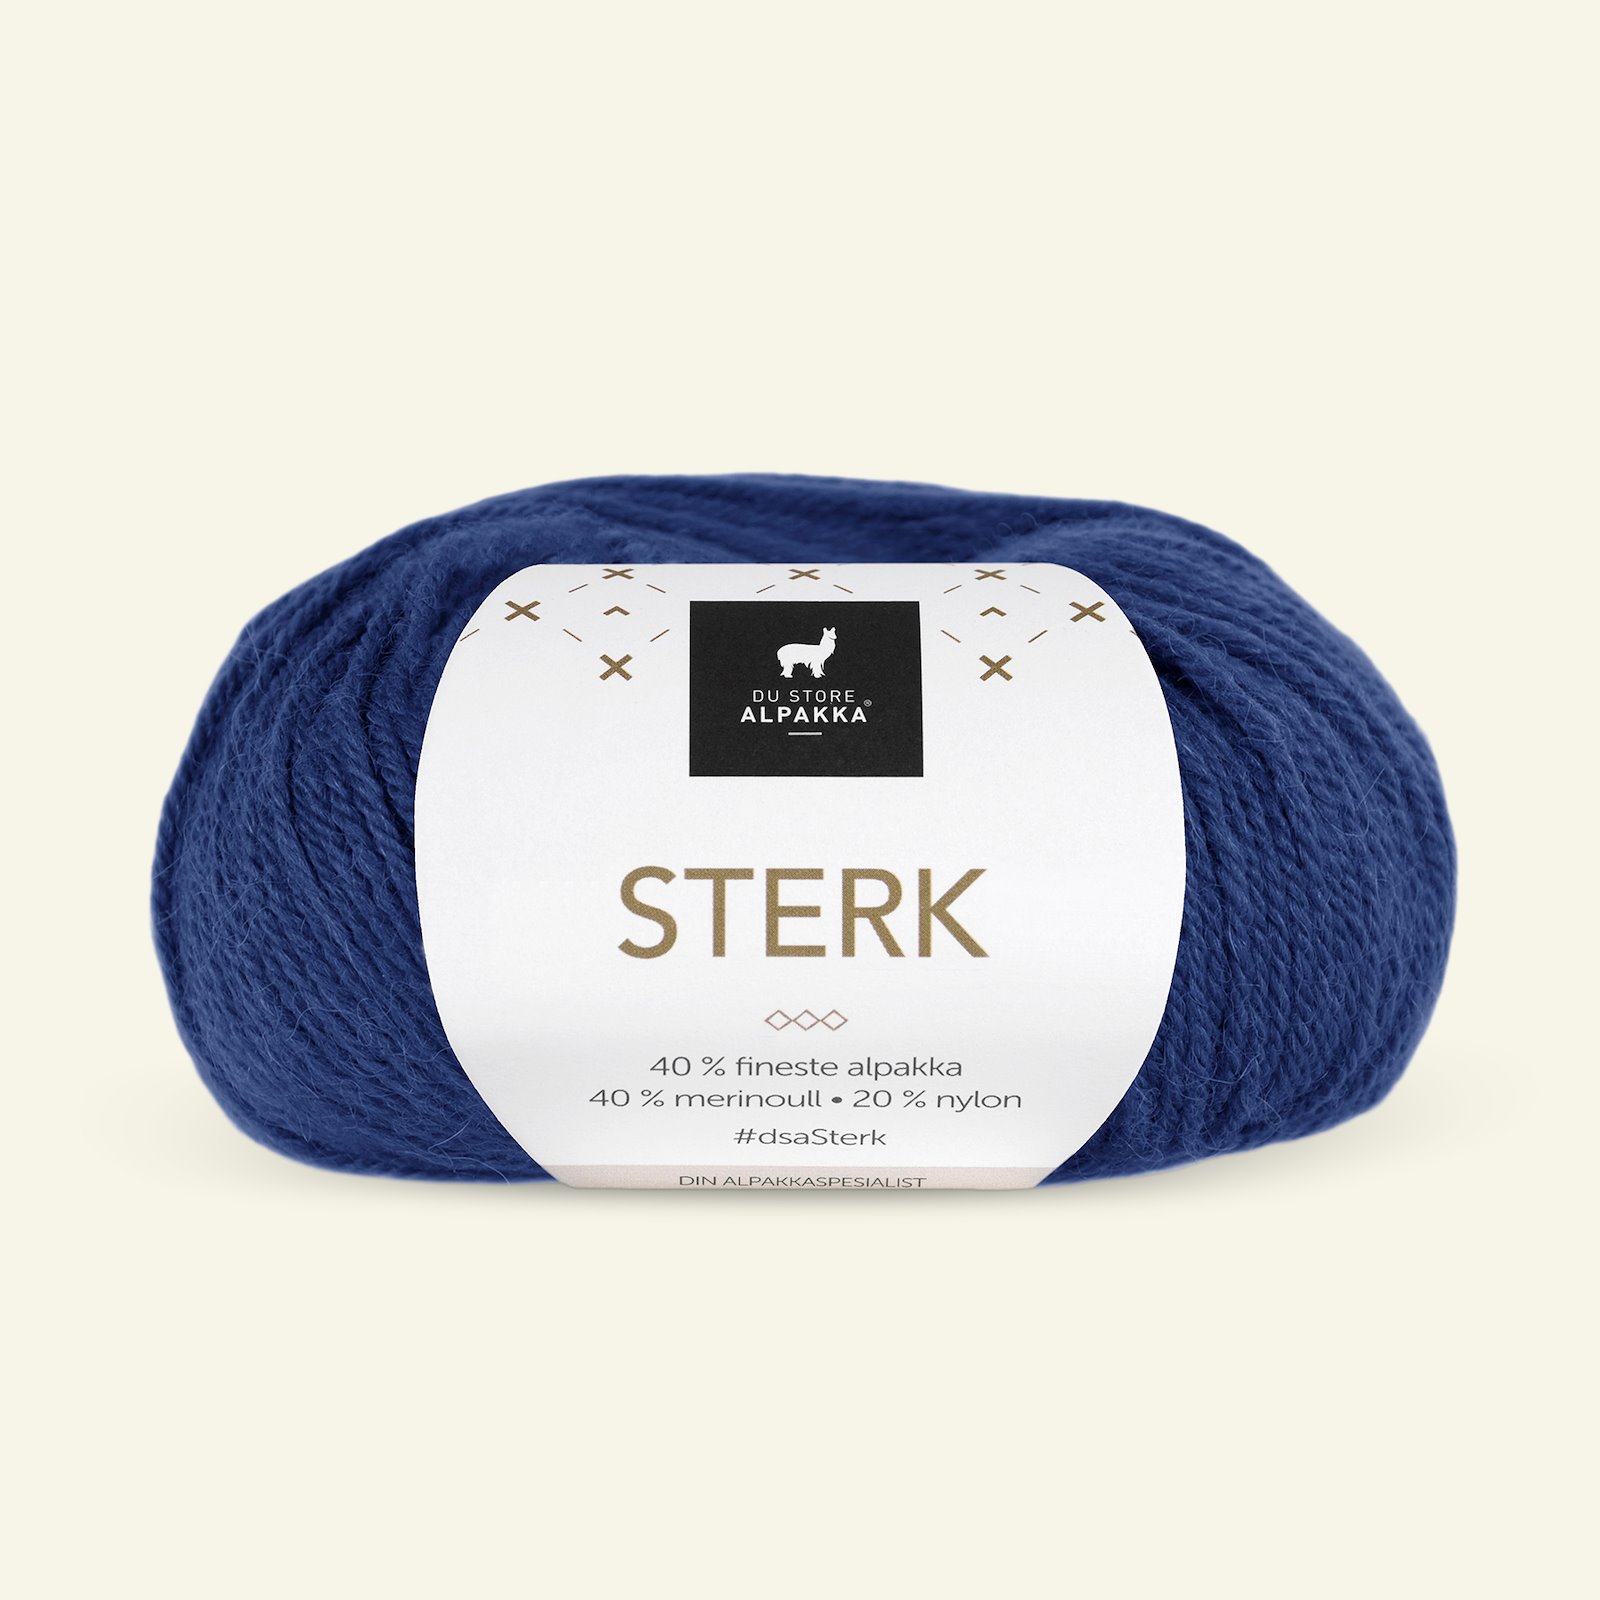 Du Store Alpakka, alpaca merino mixed yarn "Sterk", blue (815) 90000661_pack